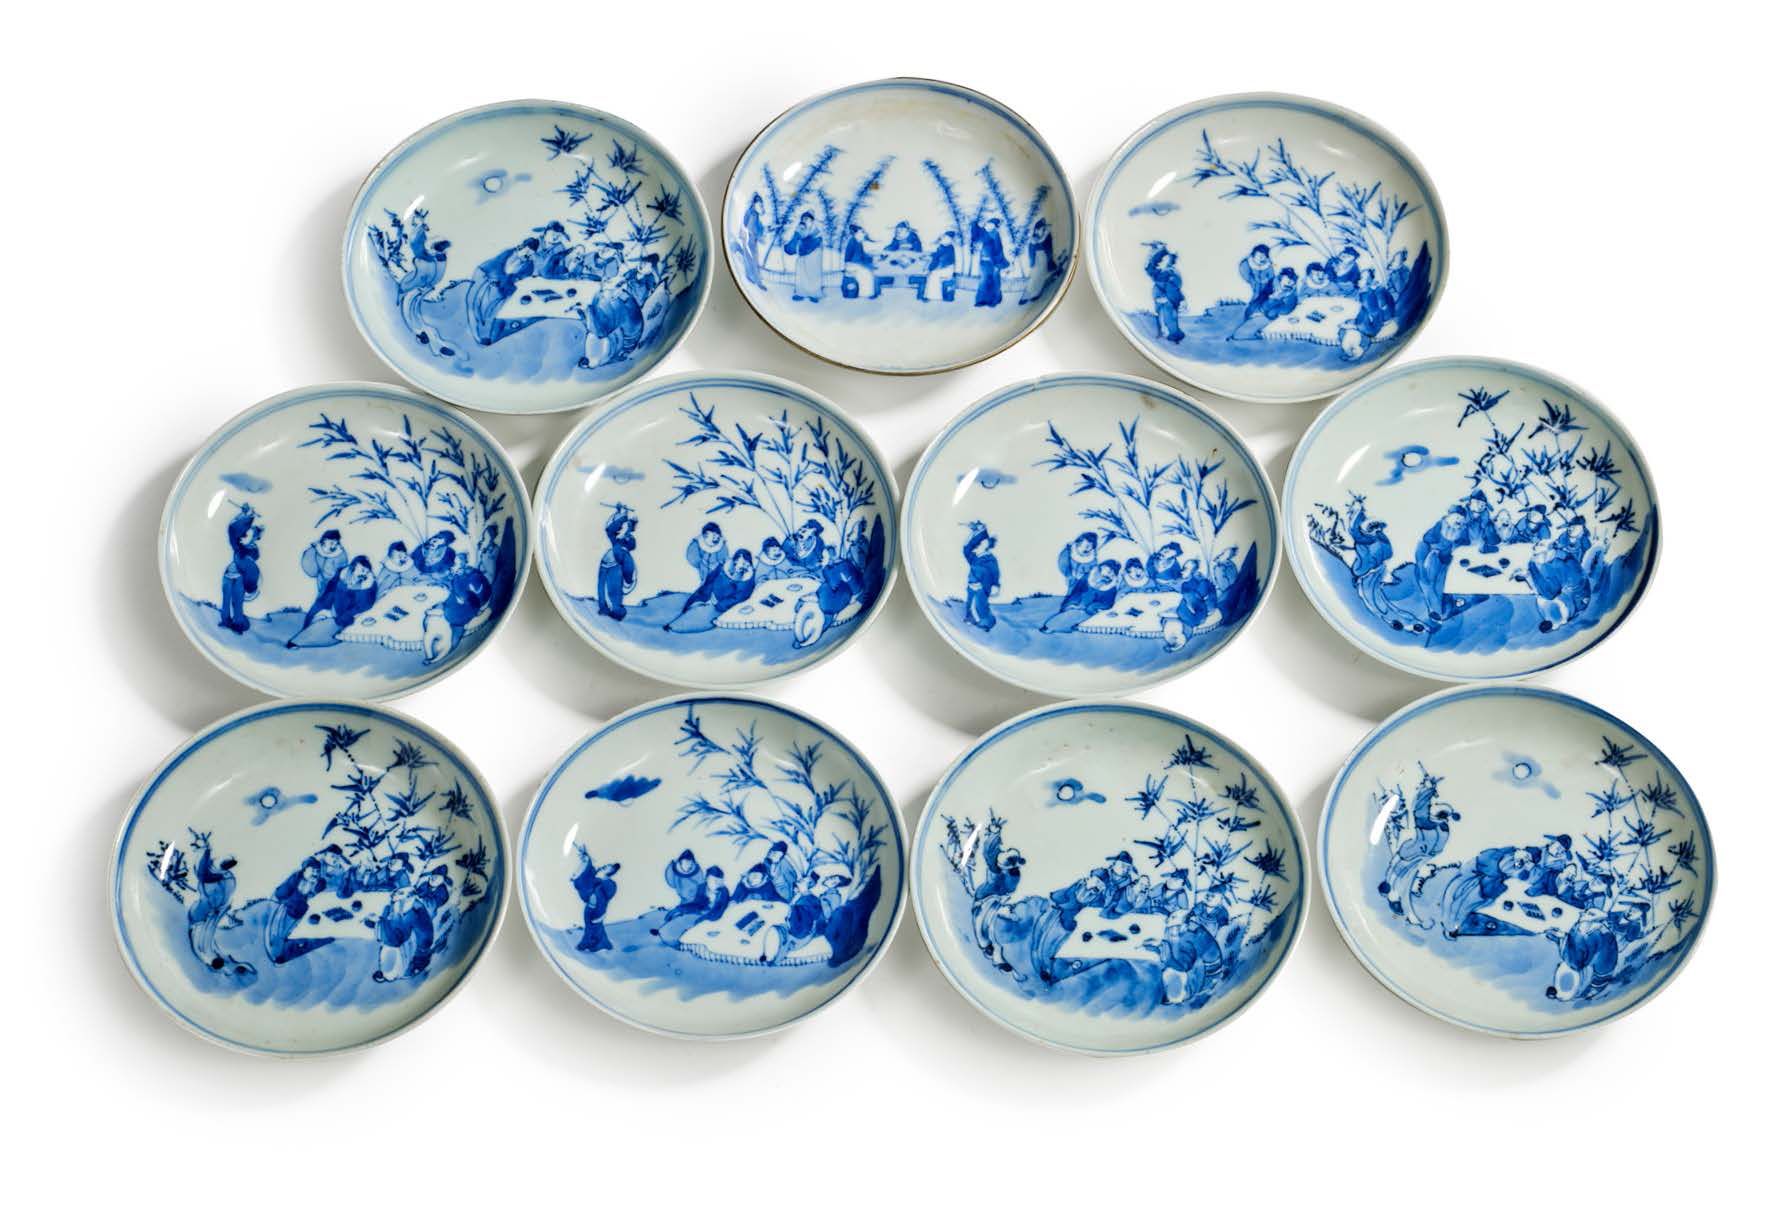 Chine pour le Vietnam XIXe siècle 
一套11个圆形青花瓷杯，装饰有竹林七贤，其中一个杯沿用金属环绕。 

有金属边的那件底部有&hellip;